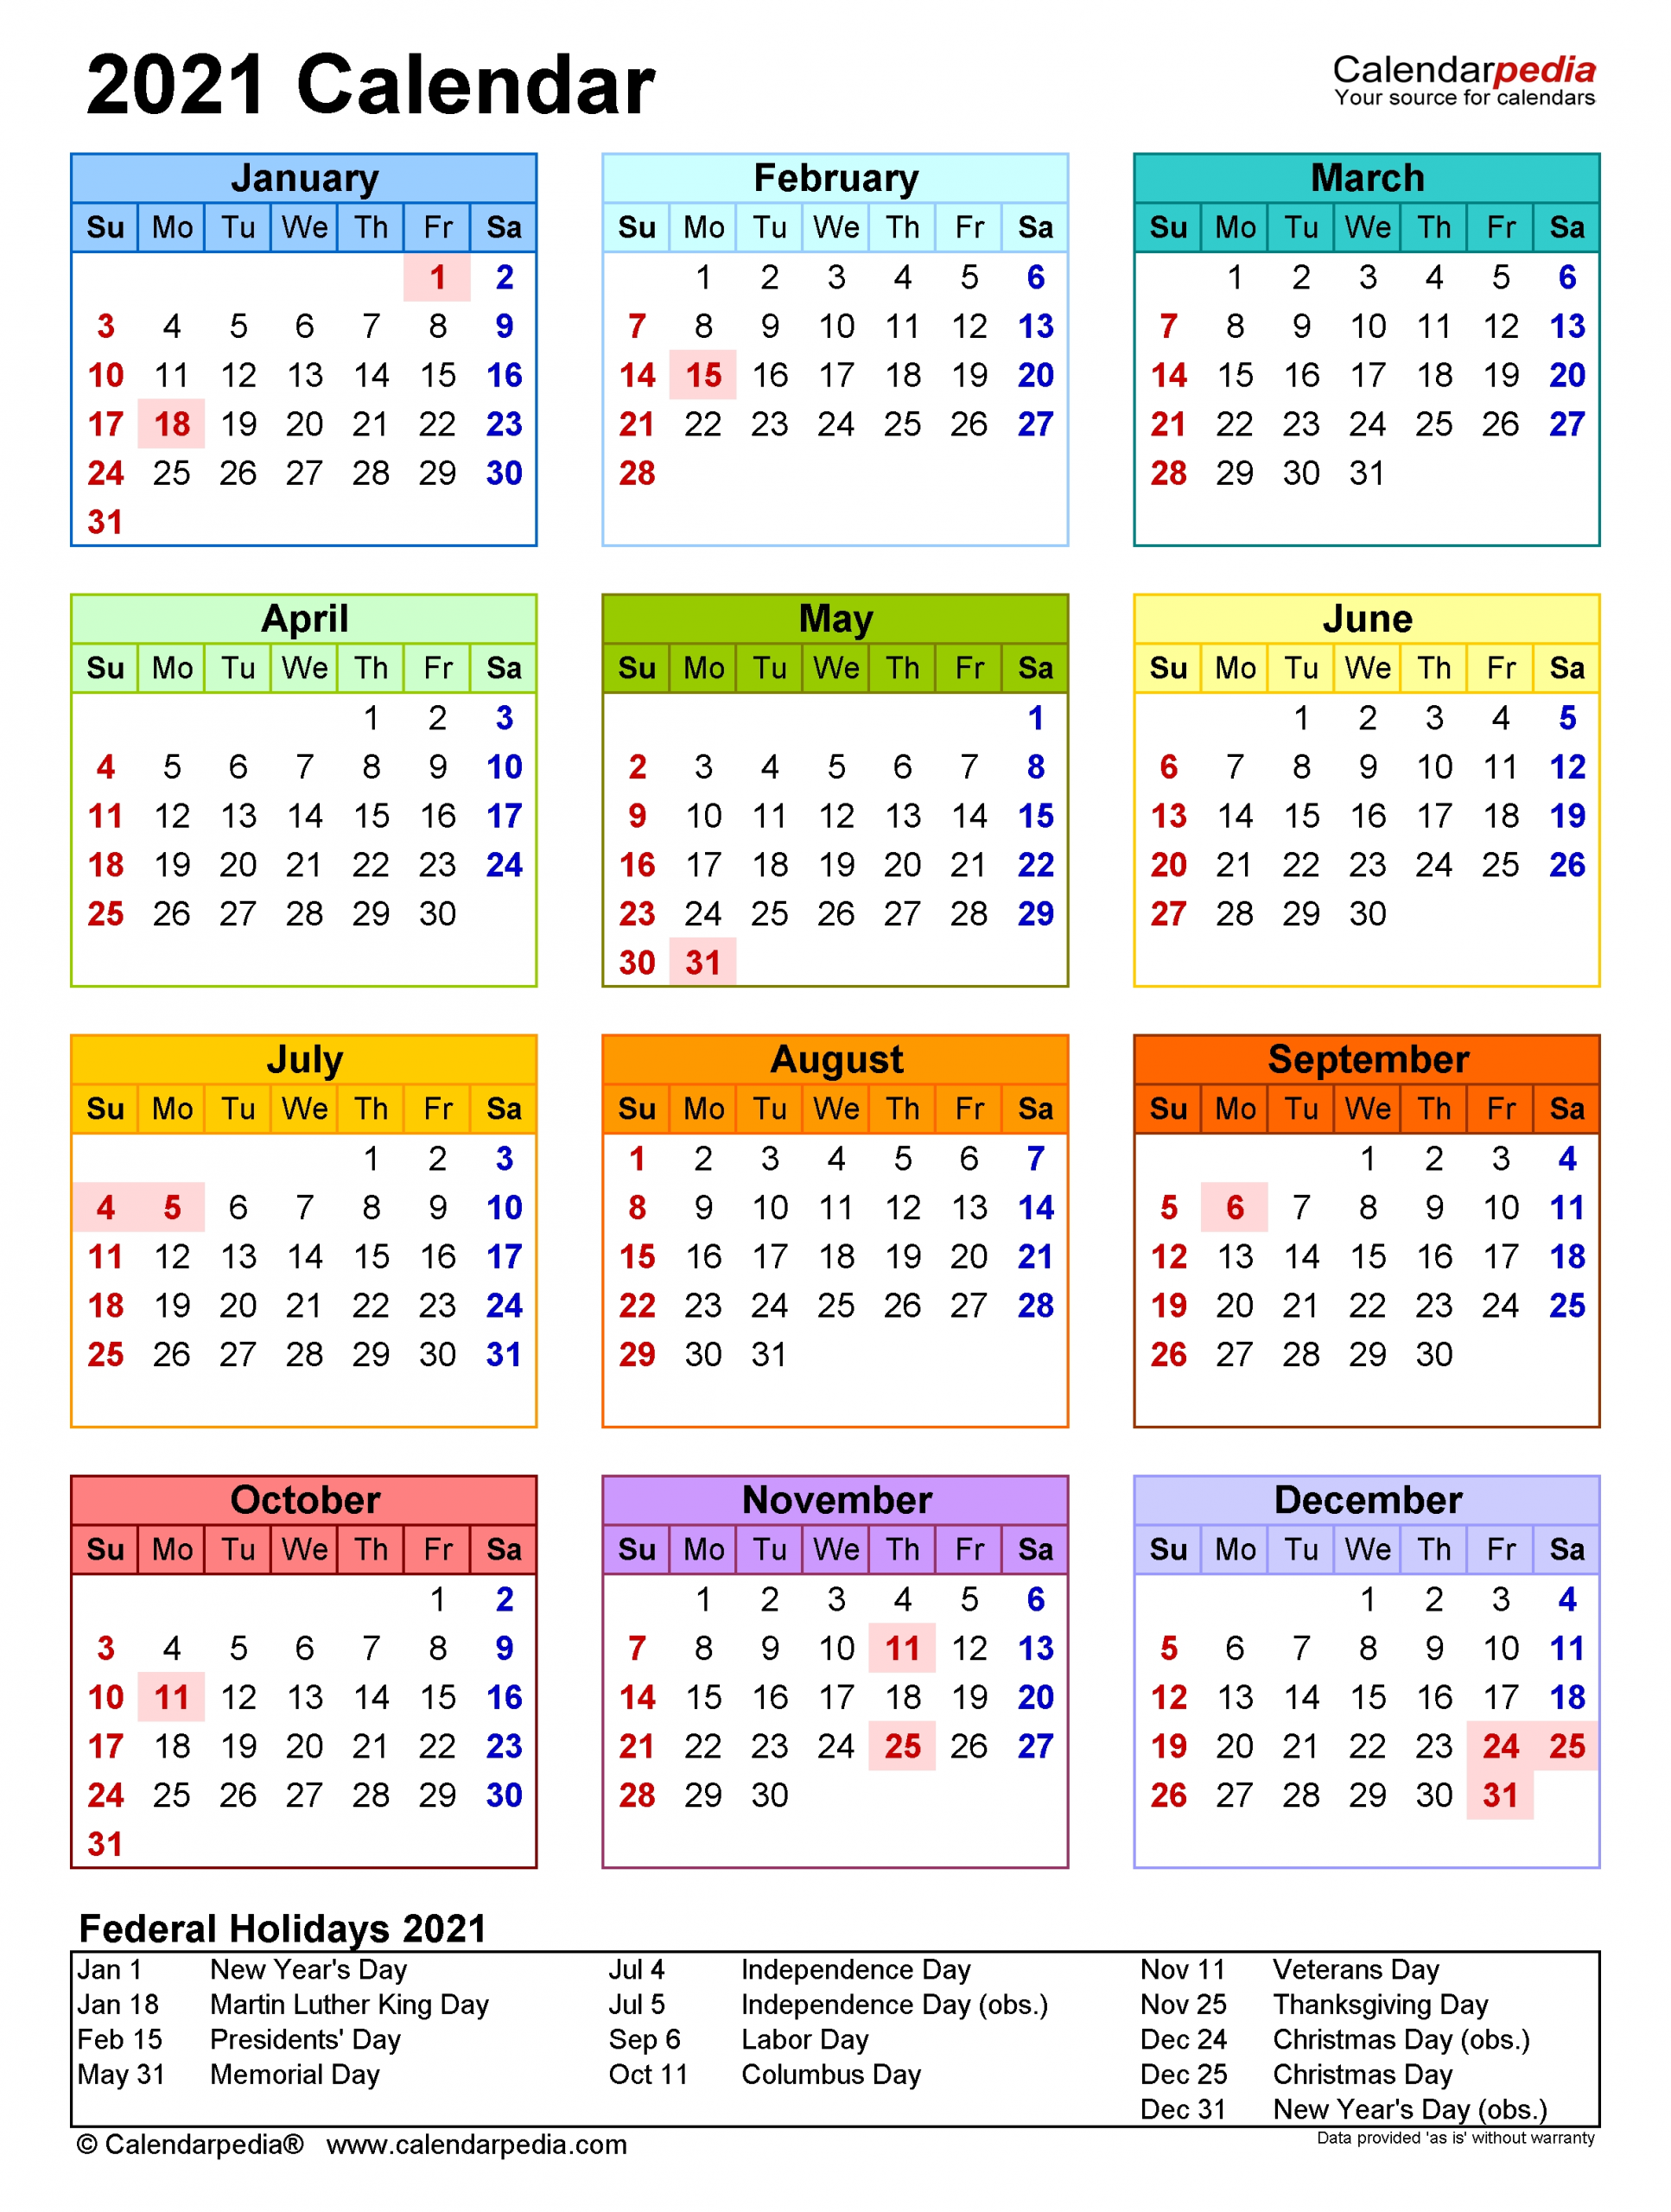 2021 Calendar - Free Printable Word Templates - Calendarpedia-Microsoft Calendar Template 2021